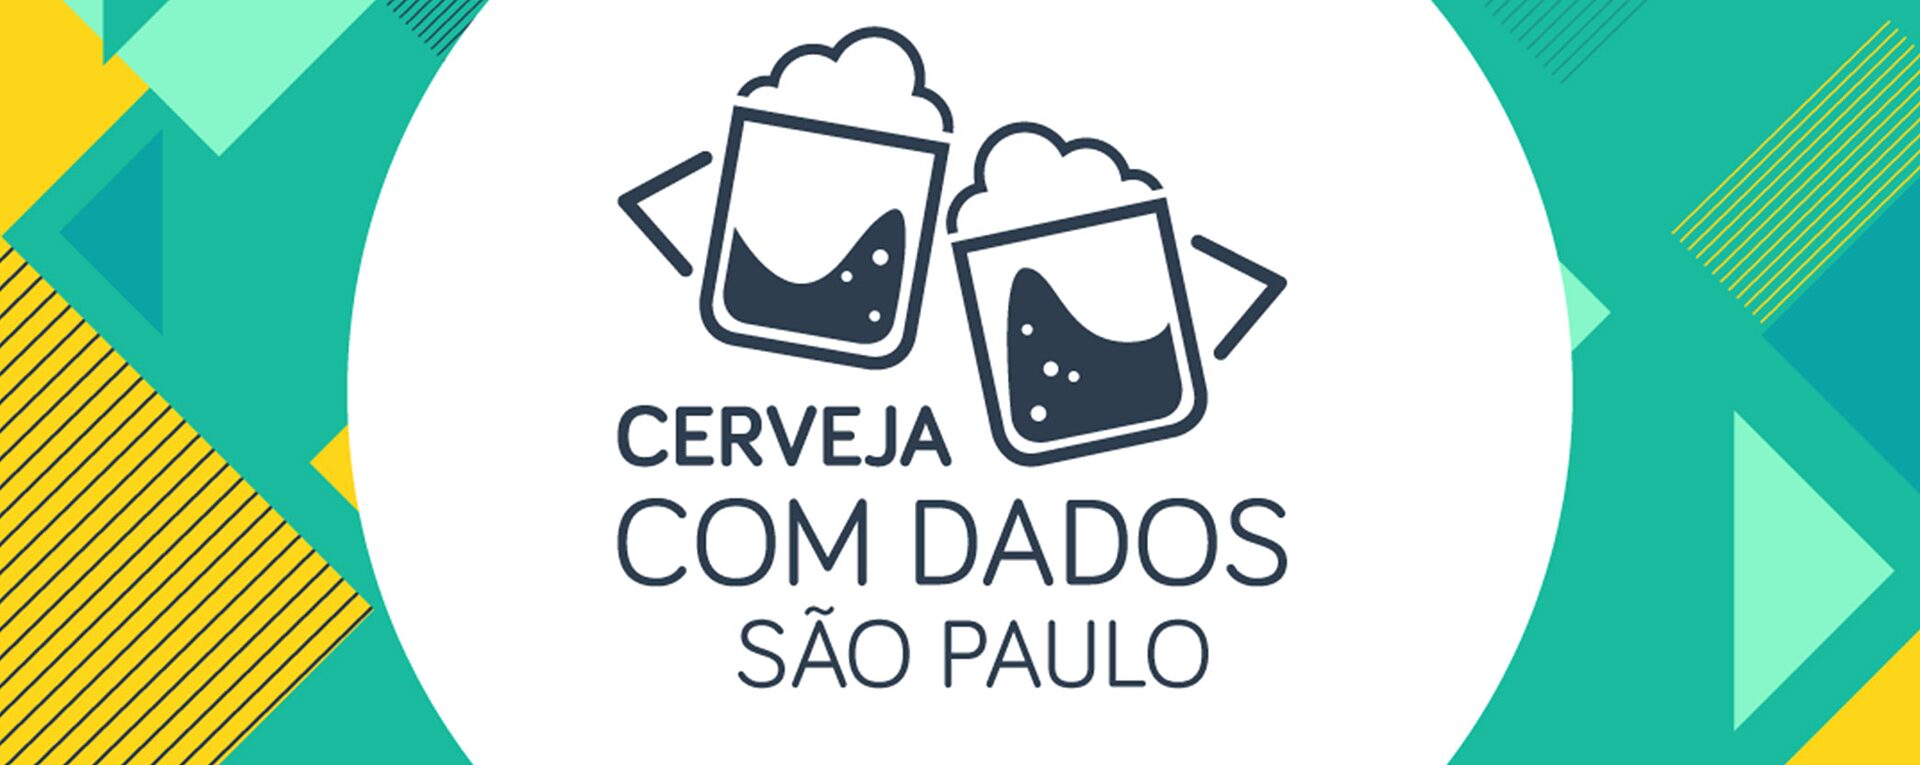 pergunta historia Archives - Cerveja Brasileira